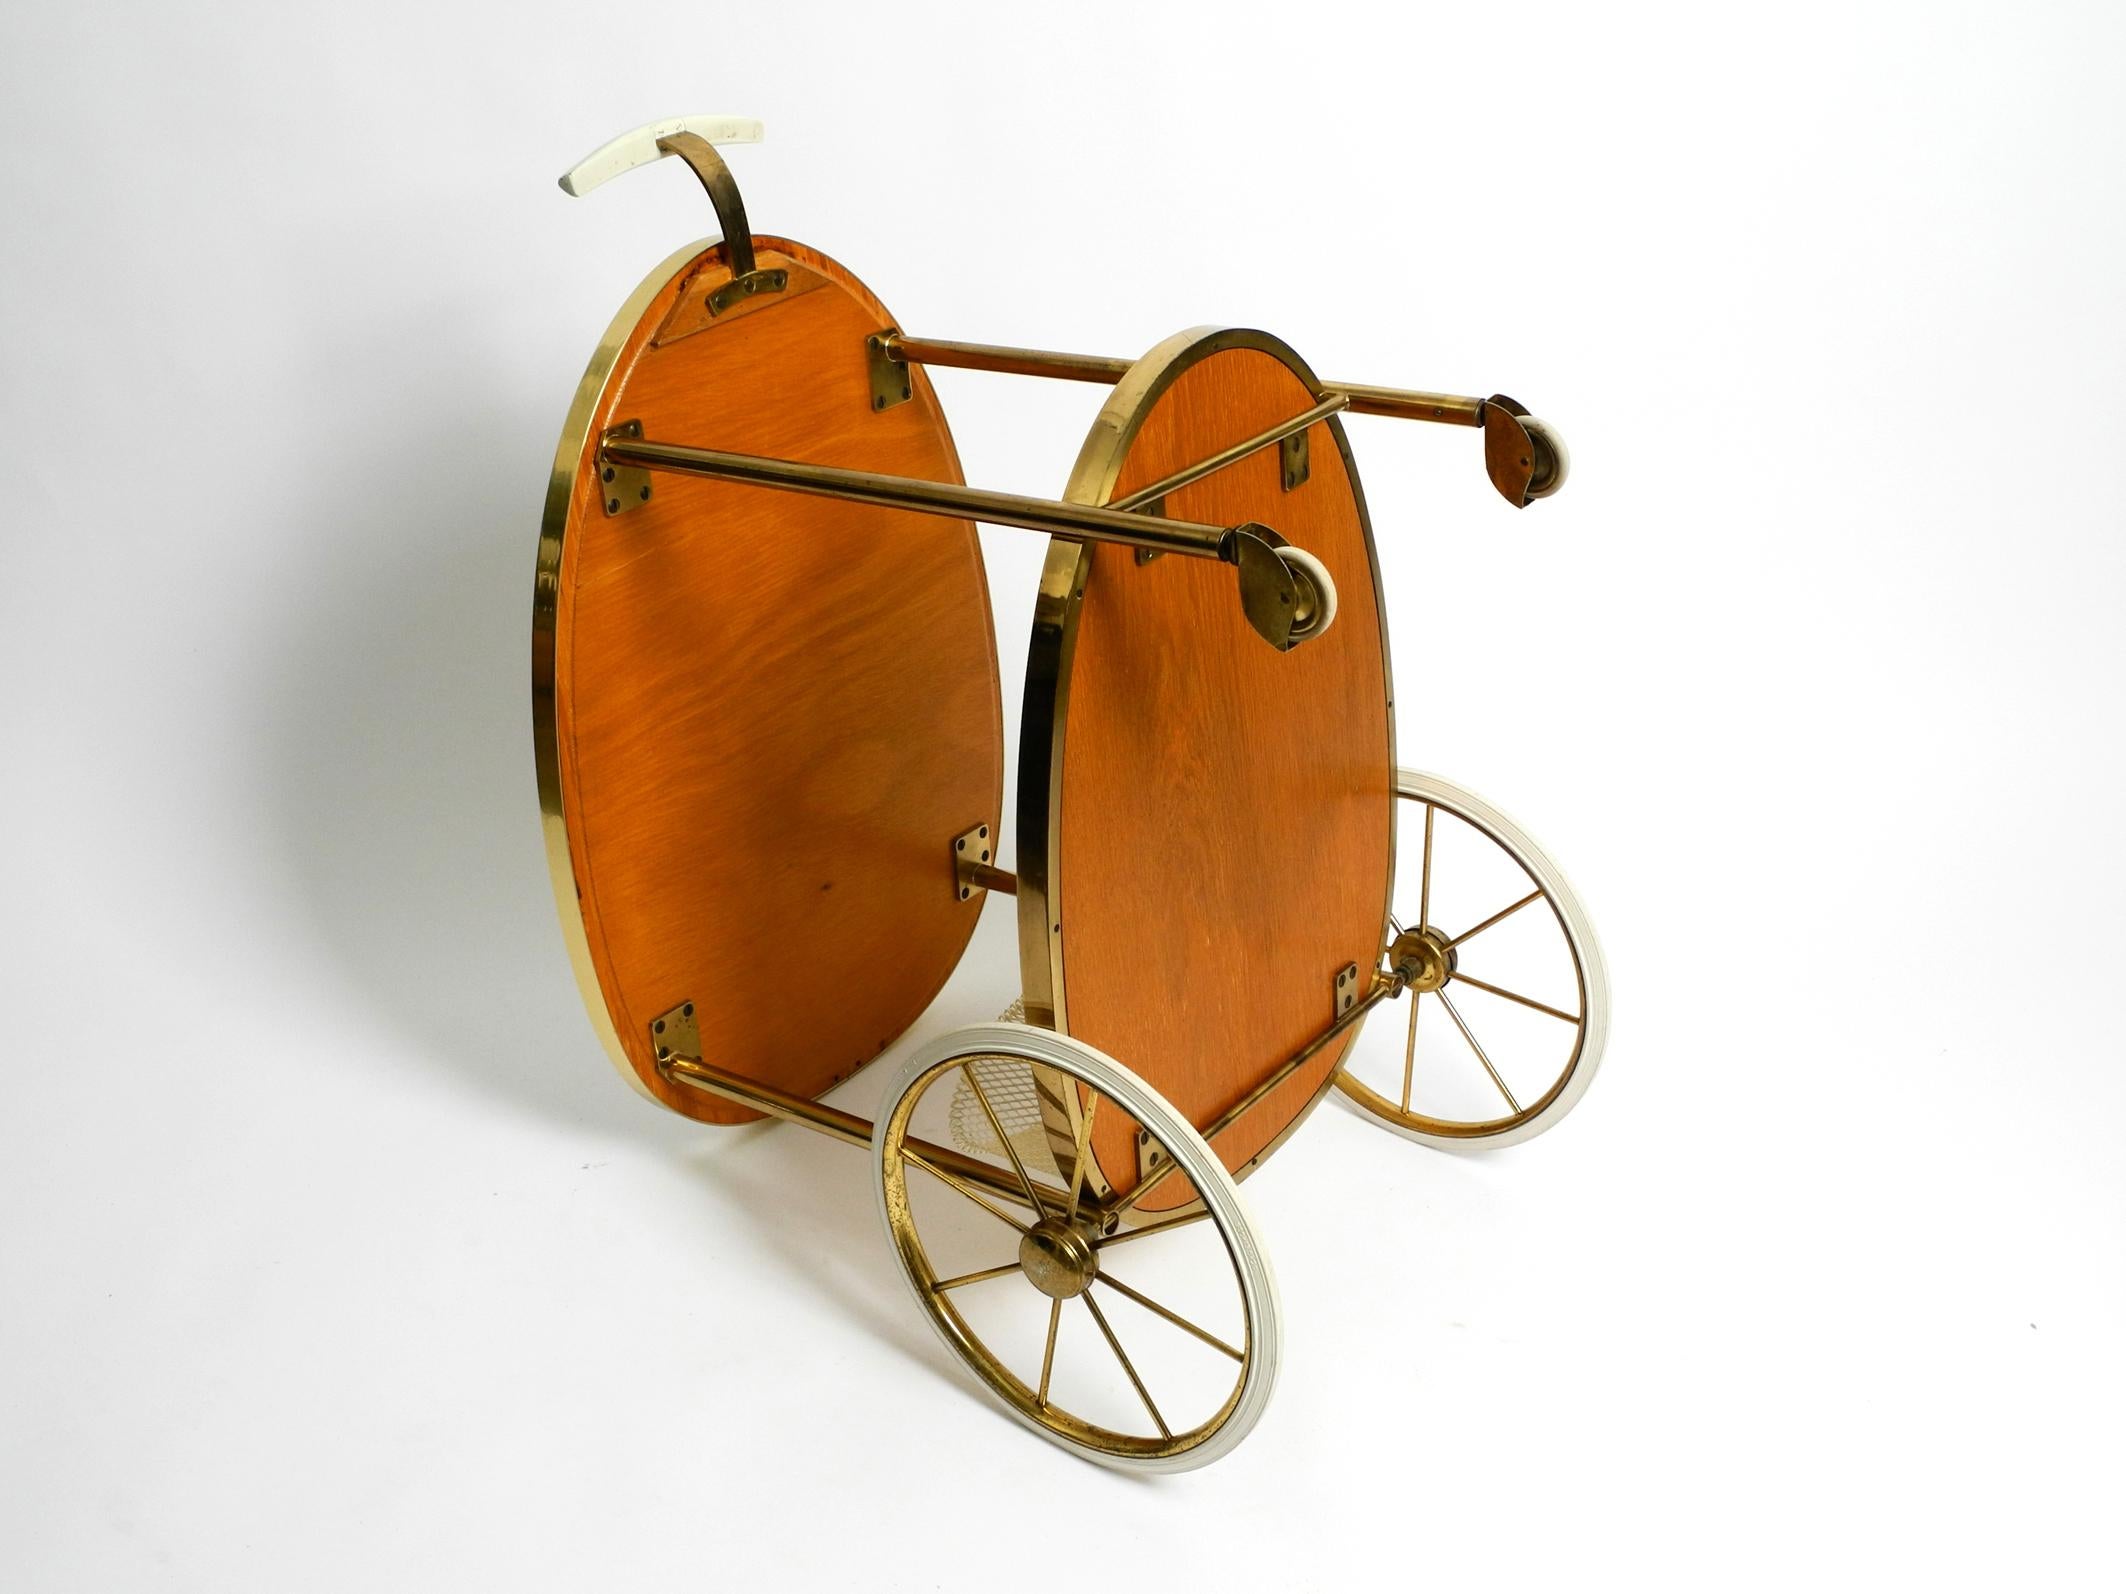 Mid Century brass and wood serving trolley or bar cart by Vereinigte Werkstätten For Sale 3